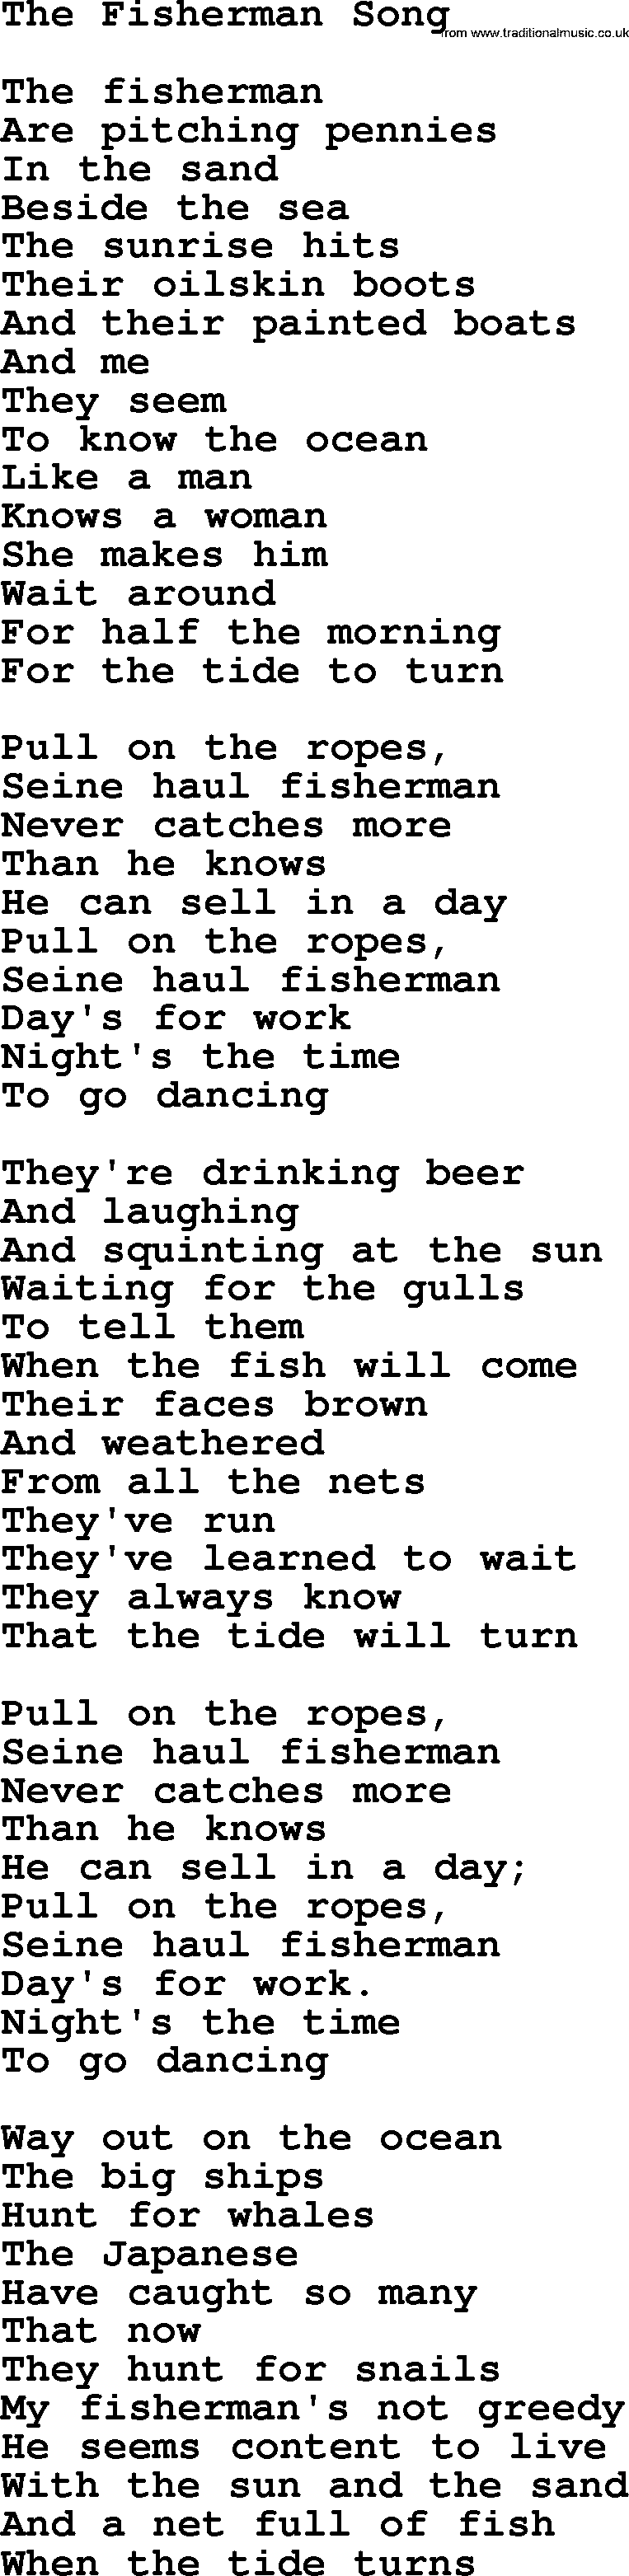 Dolly Parton song The Fisherman Song.txt lyrics